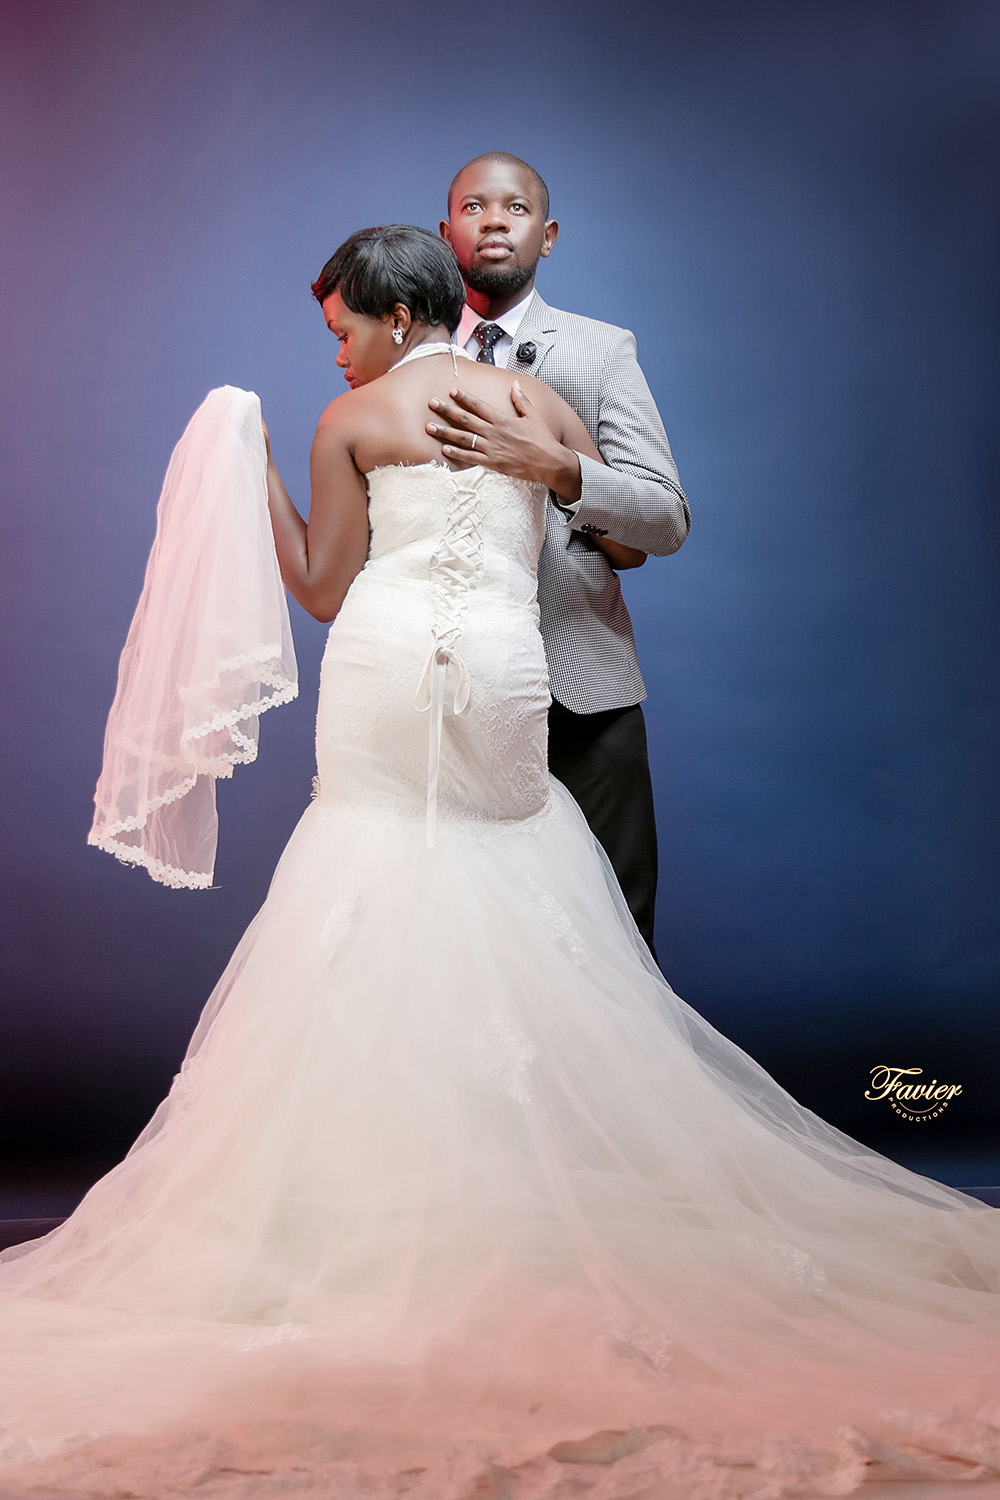 1510825248_Top Wedding Photographer Kenya - Favier Productions 1.jpg